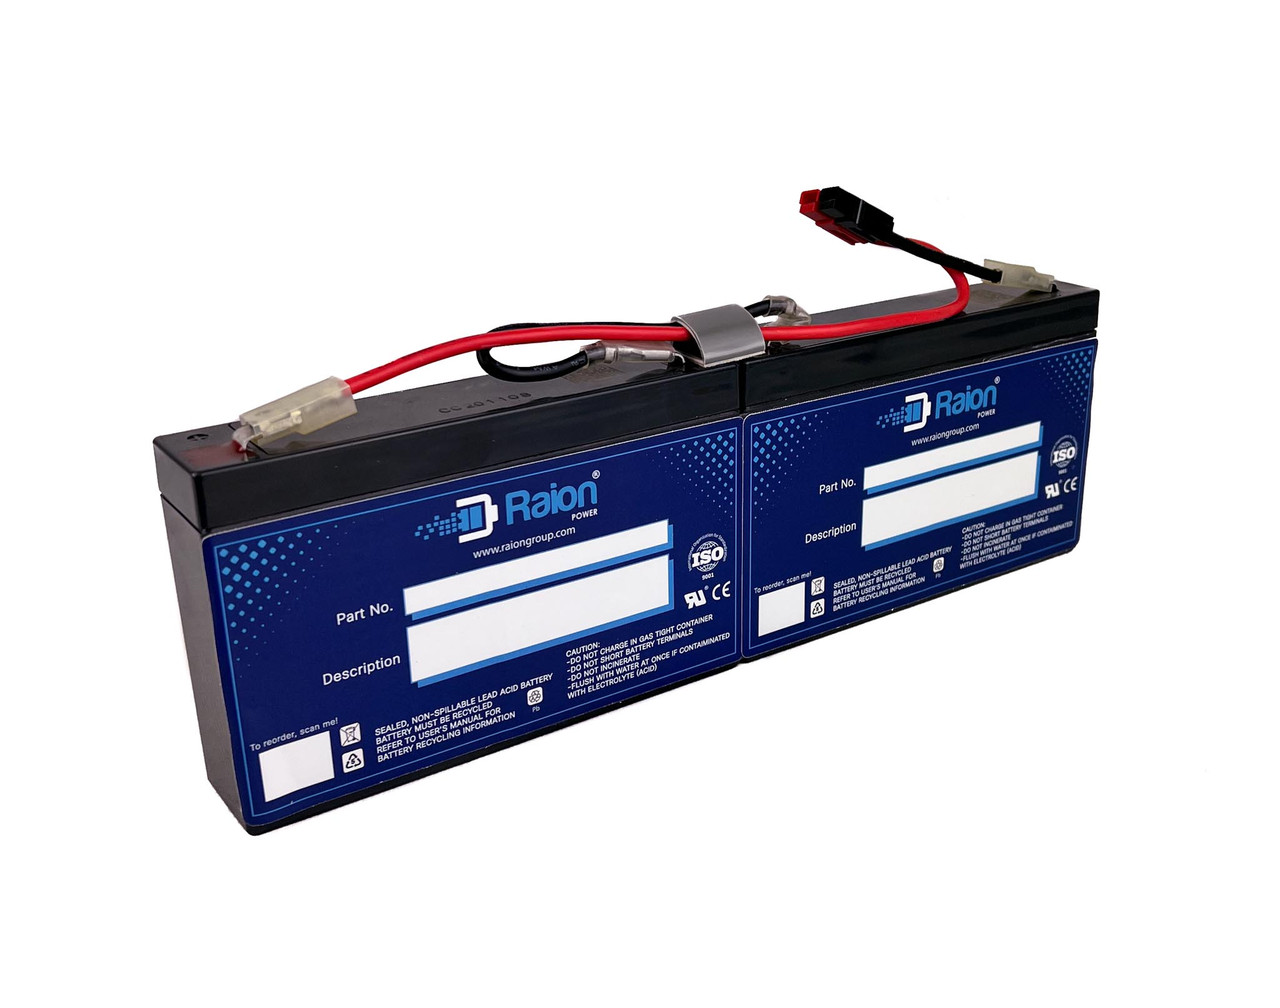 Raion Power RG-RBC18 Replacement Battery Cartridge for APC Smart-UPS SC 450VA RM 1U 120V SC450RM1U